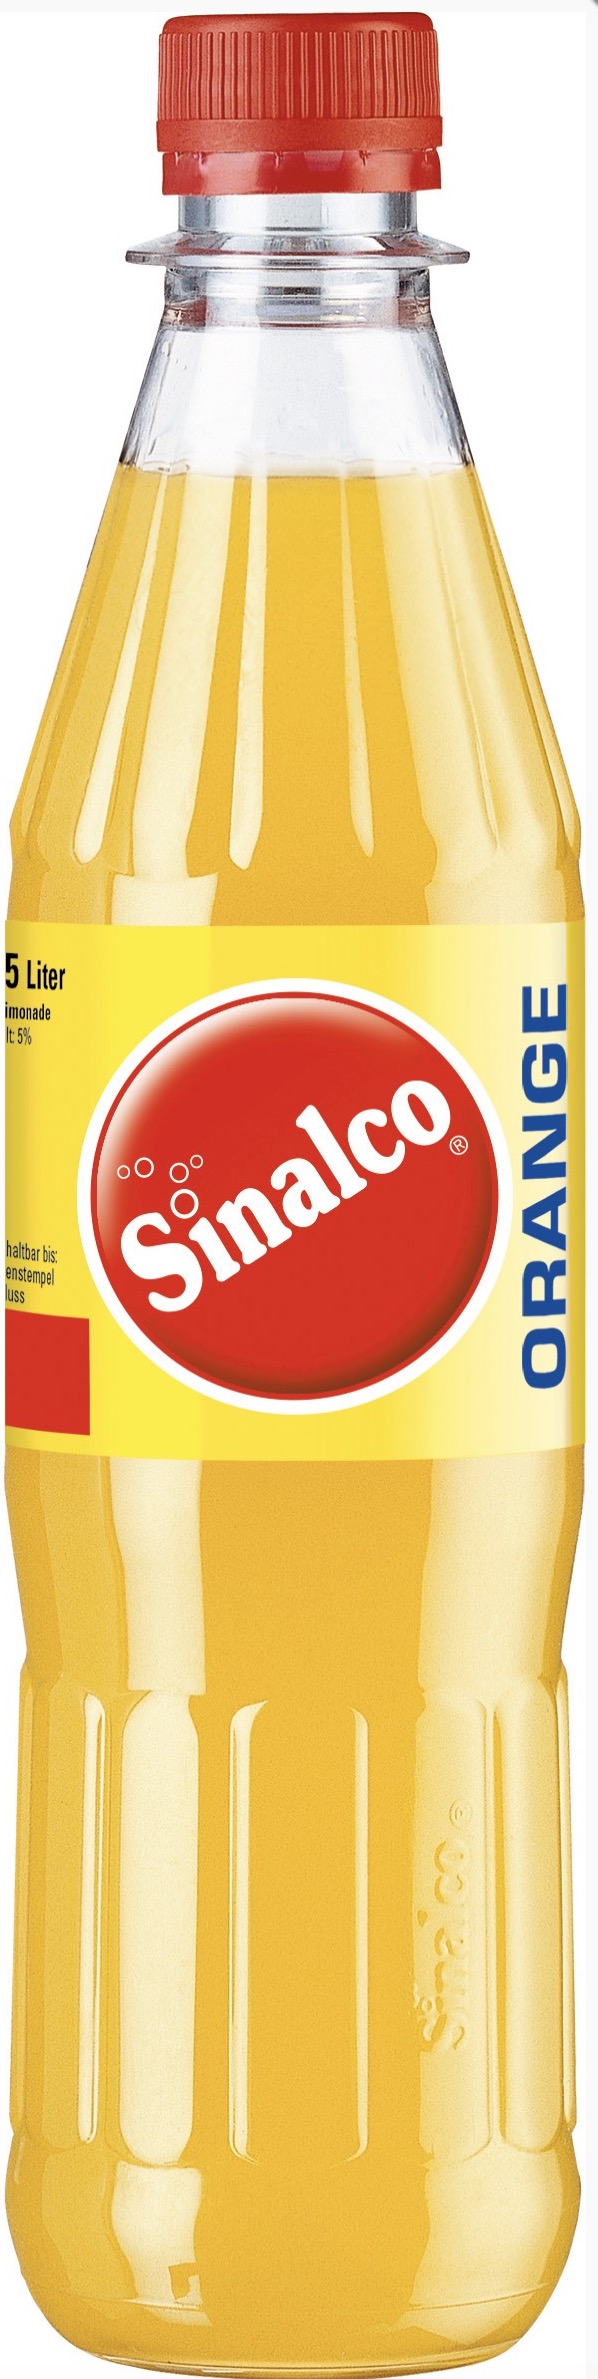 Sinalco Orange 0,5L MEHRWEG